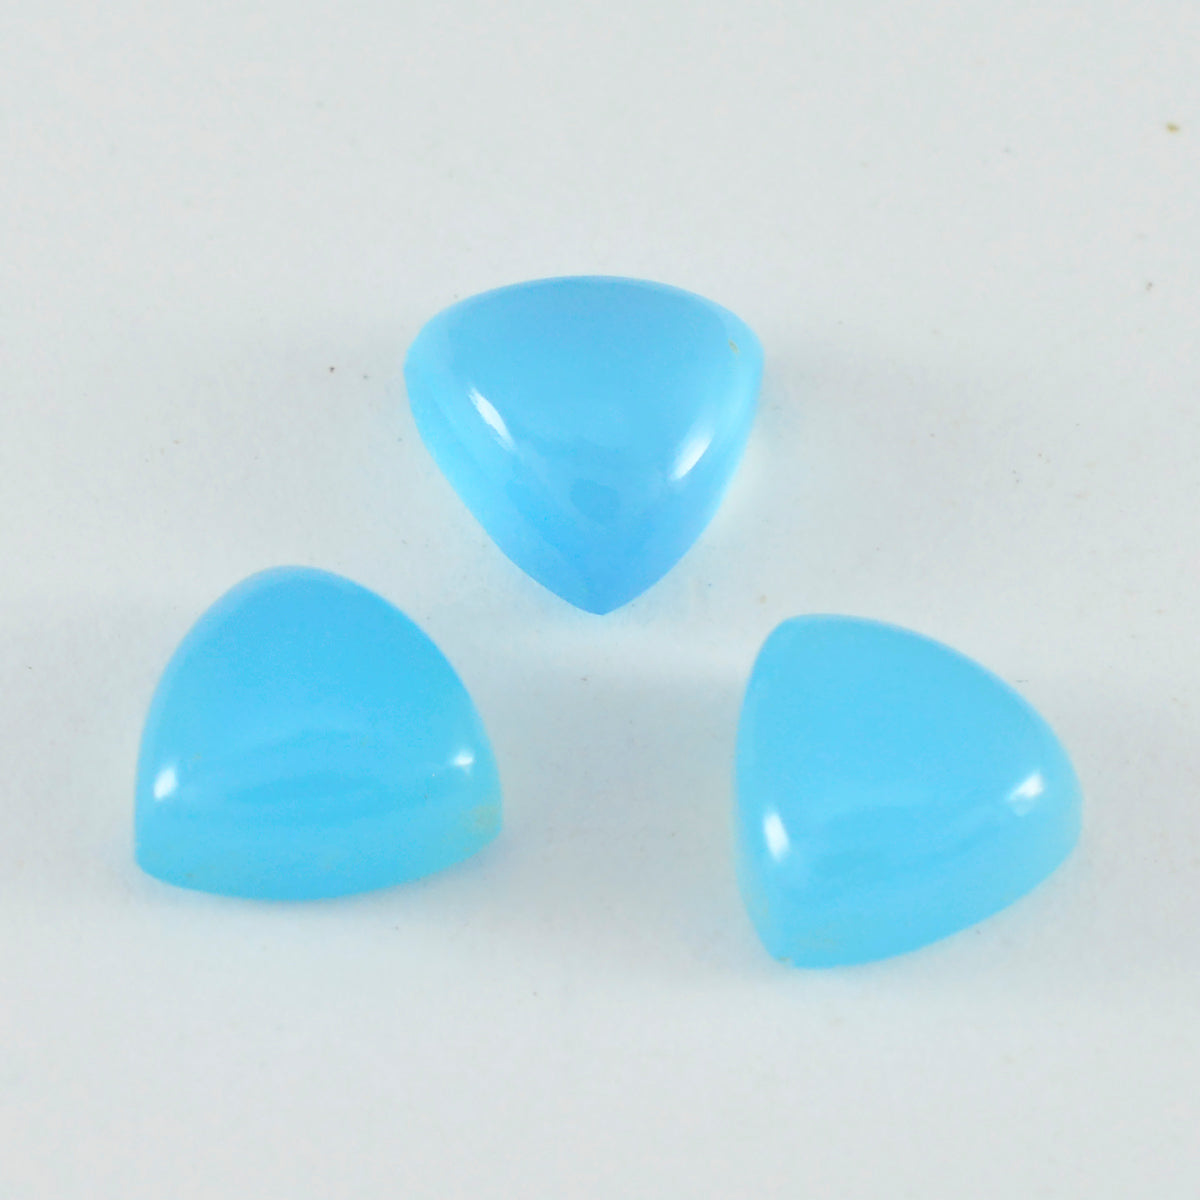 riyogems 1 st blå kalcedon cabochon 8x8 mm biljoner form fantastisk kvalitet lös sten